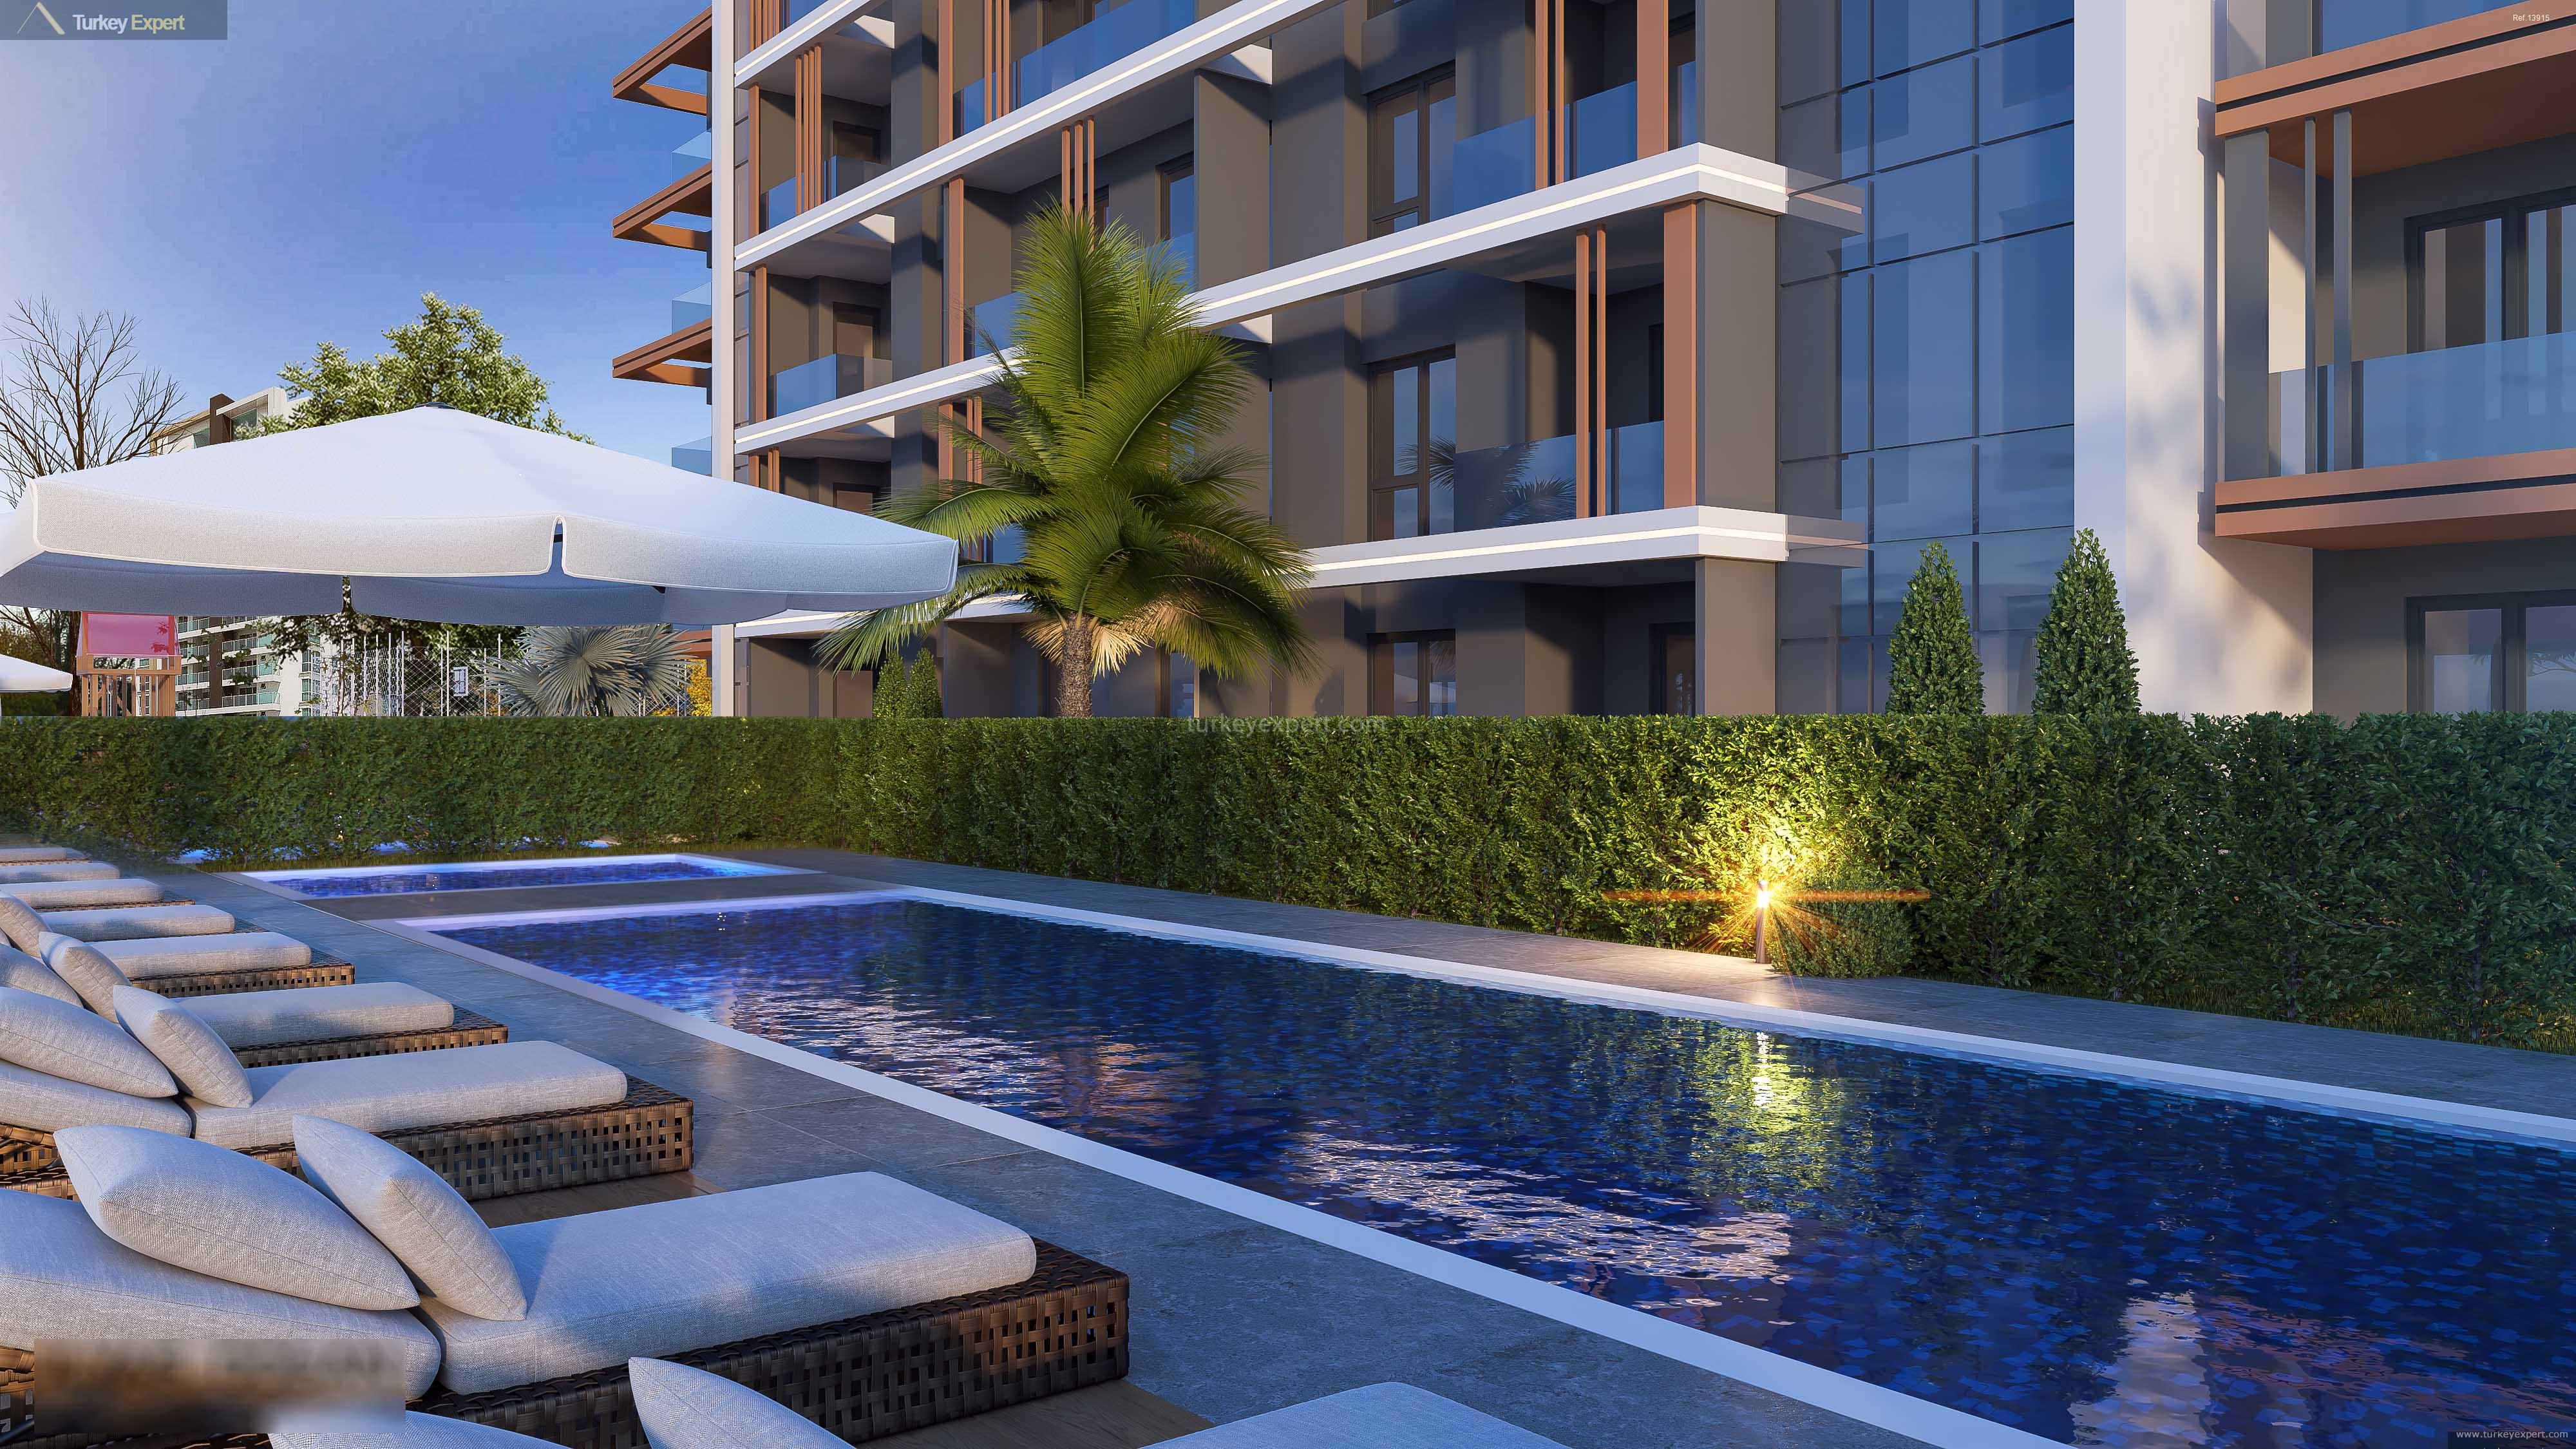 102antalya altintas apartments with a shared pool near the beach8